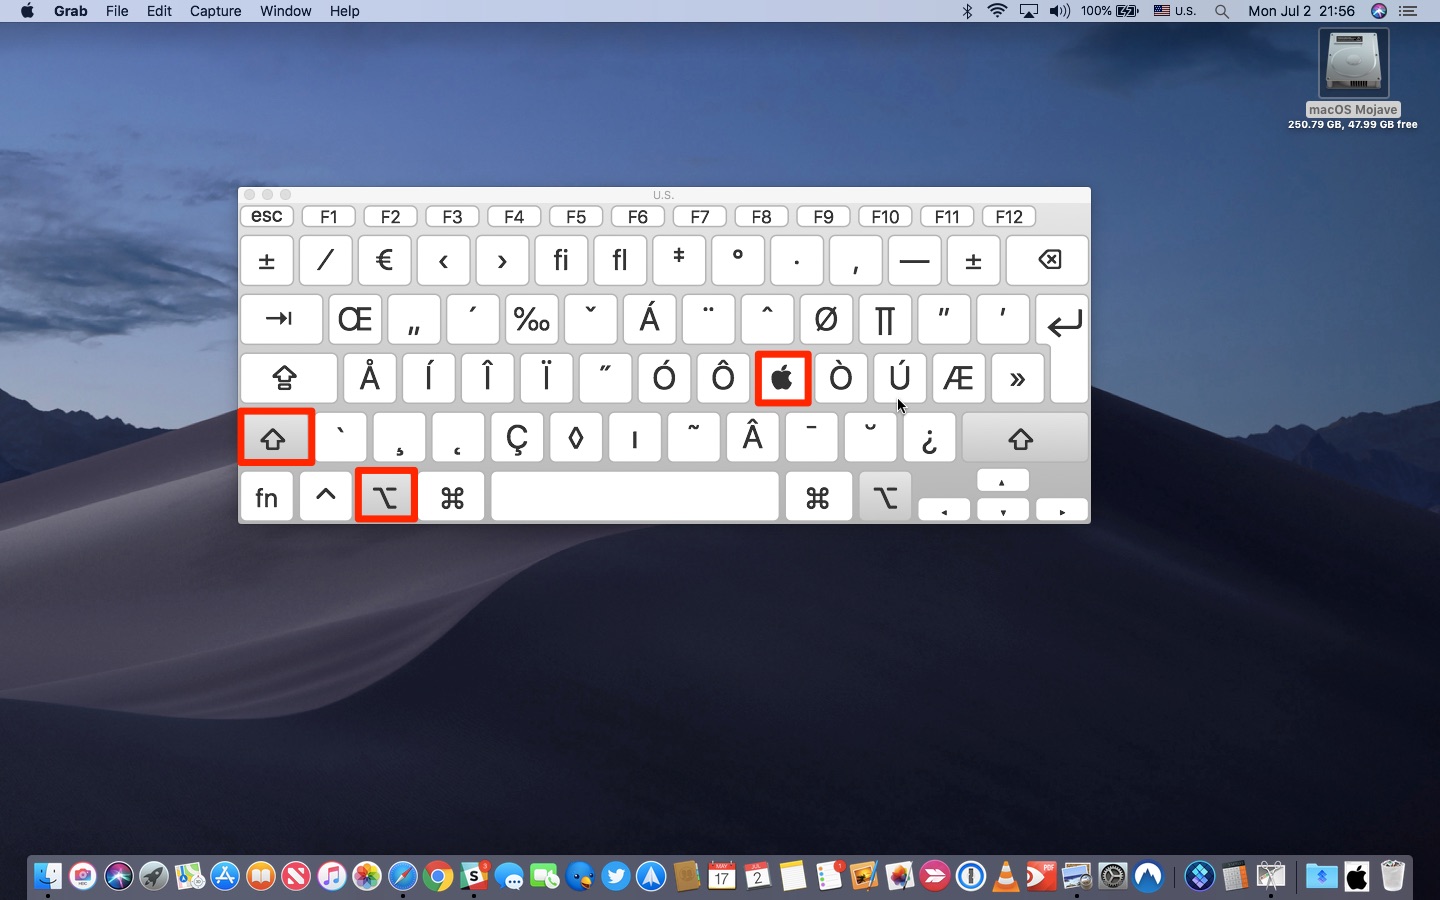 Mac os menu bar for windows